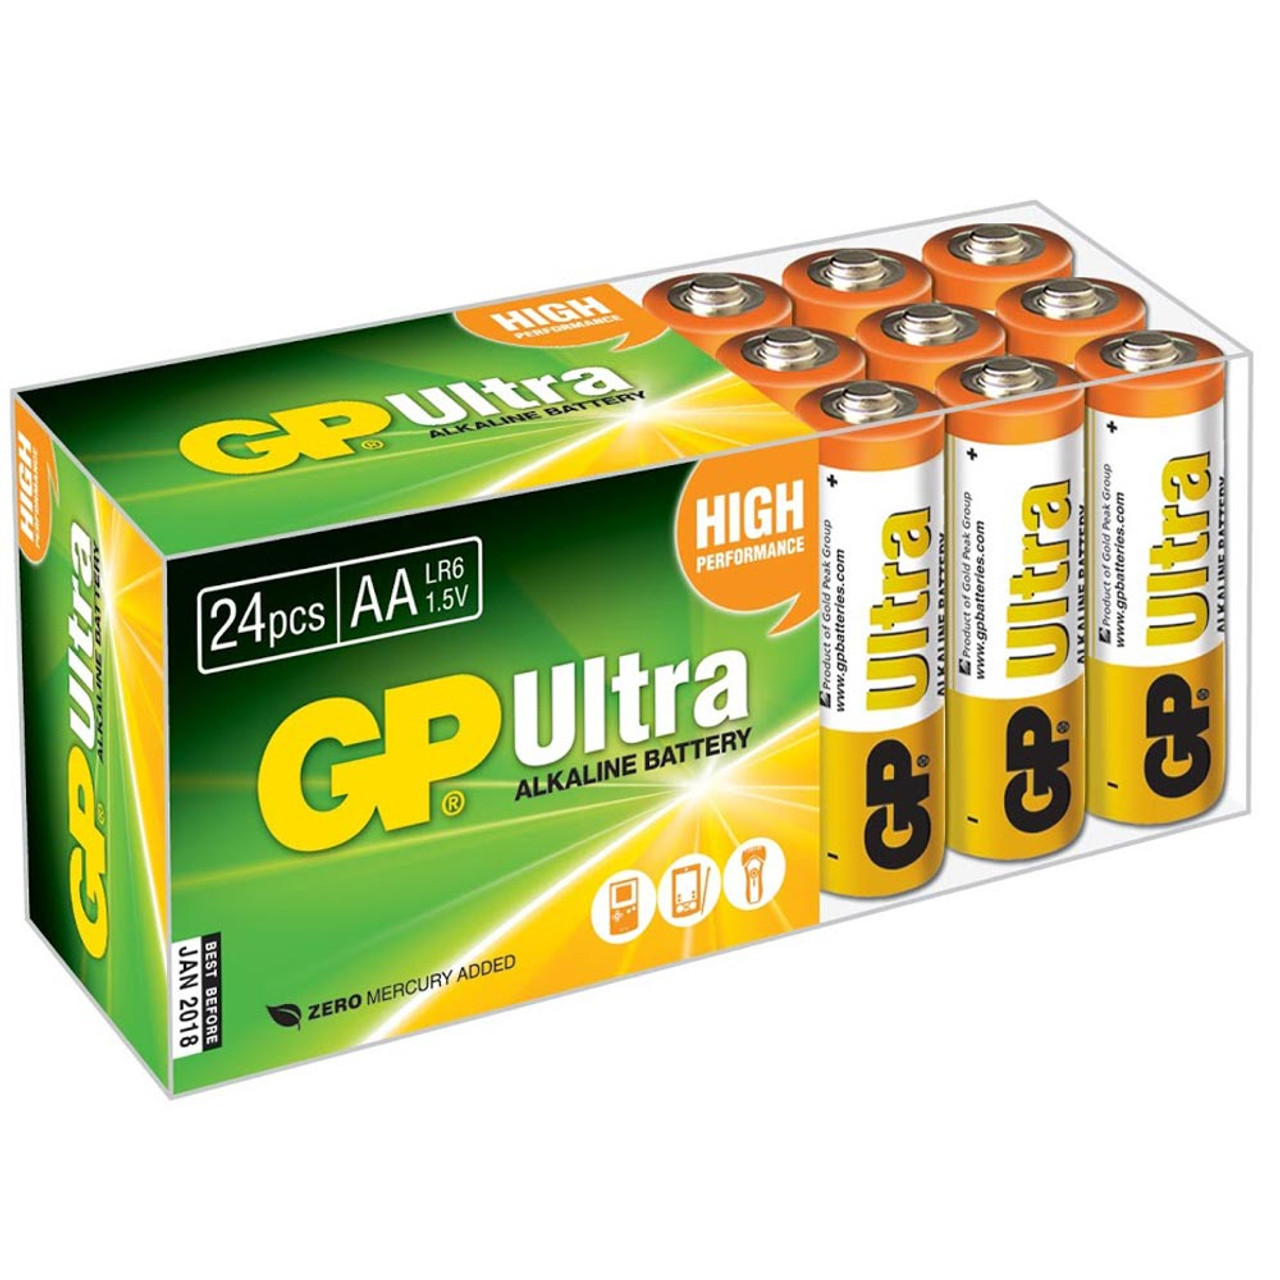 Gp alkaline battery. Батарейка GP AA lr6 Ultra. Батарейка GP Ultra+g-Tech AA (lr6). Lr6 GP Ultra батарейка. Lr06 АА батарейка.